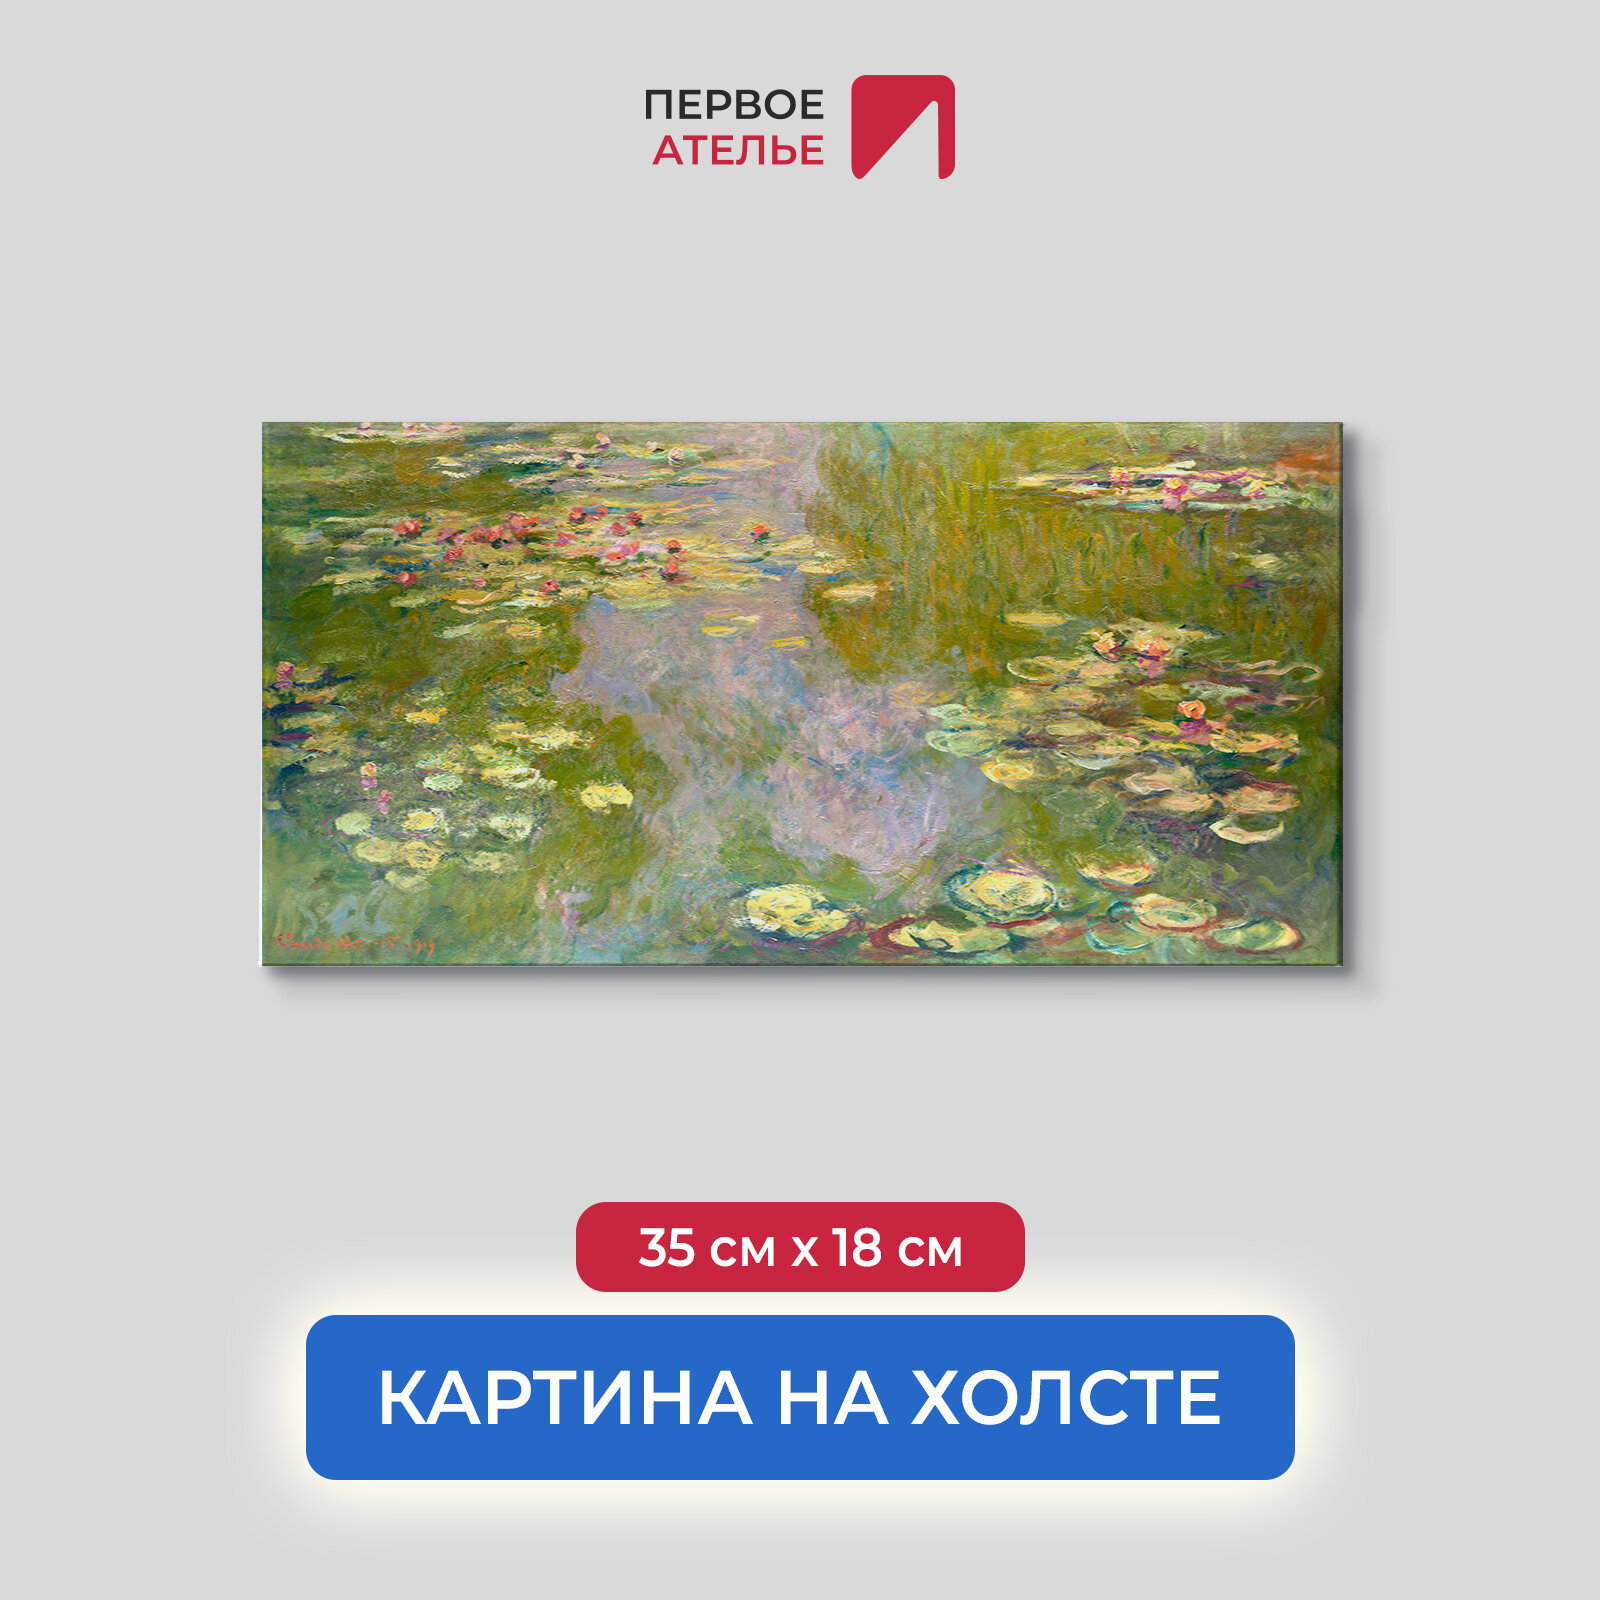 Картина репродукция Клода Моне "Водяные лилии, 1919 год" 35х18 см (ШхВ), на холсте